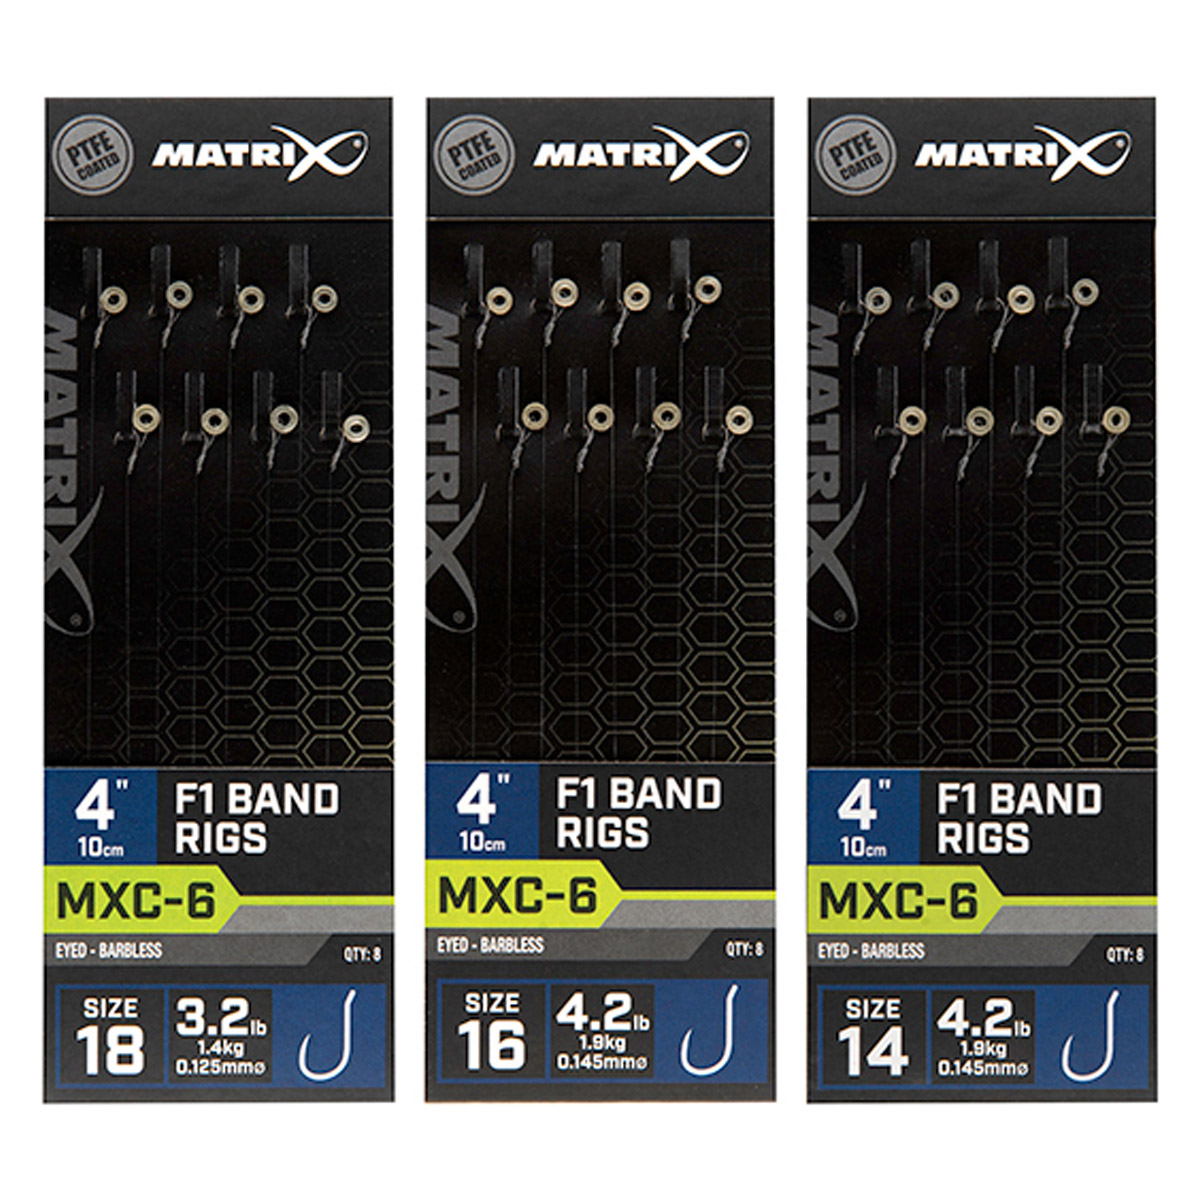 Matrix MXC-6 4" Barbless F1 Bands